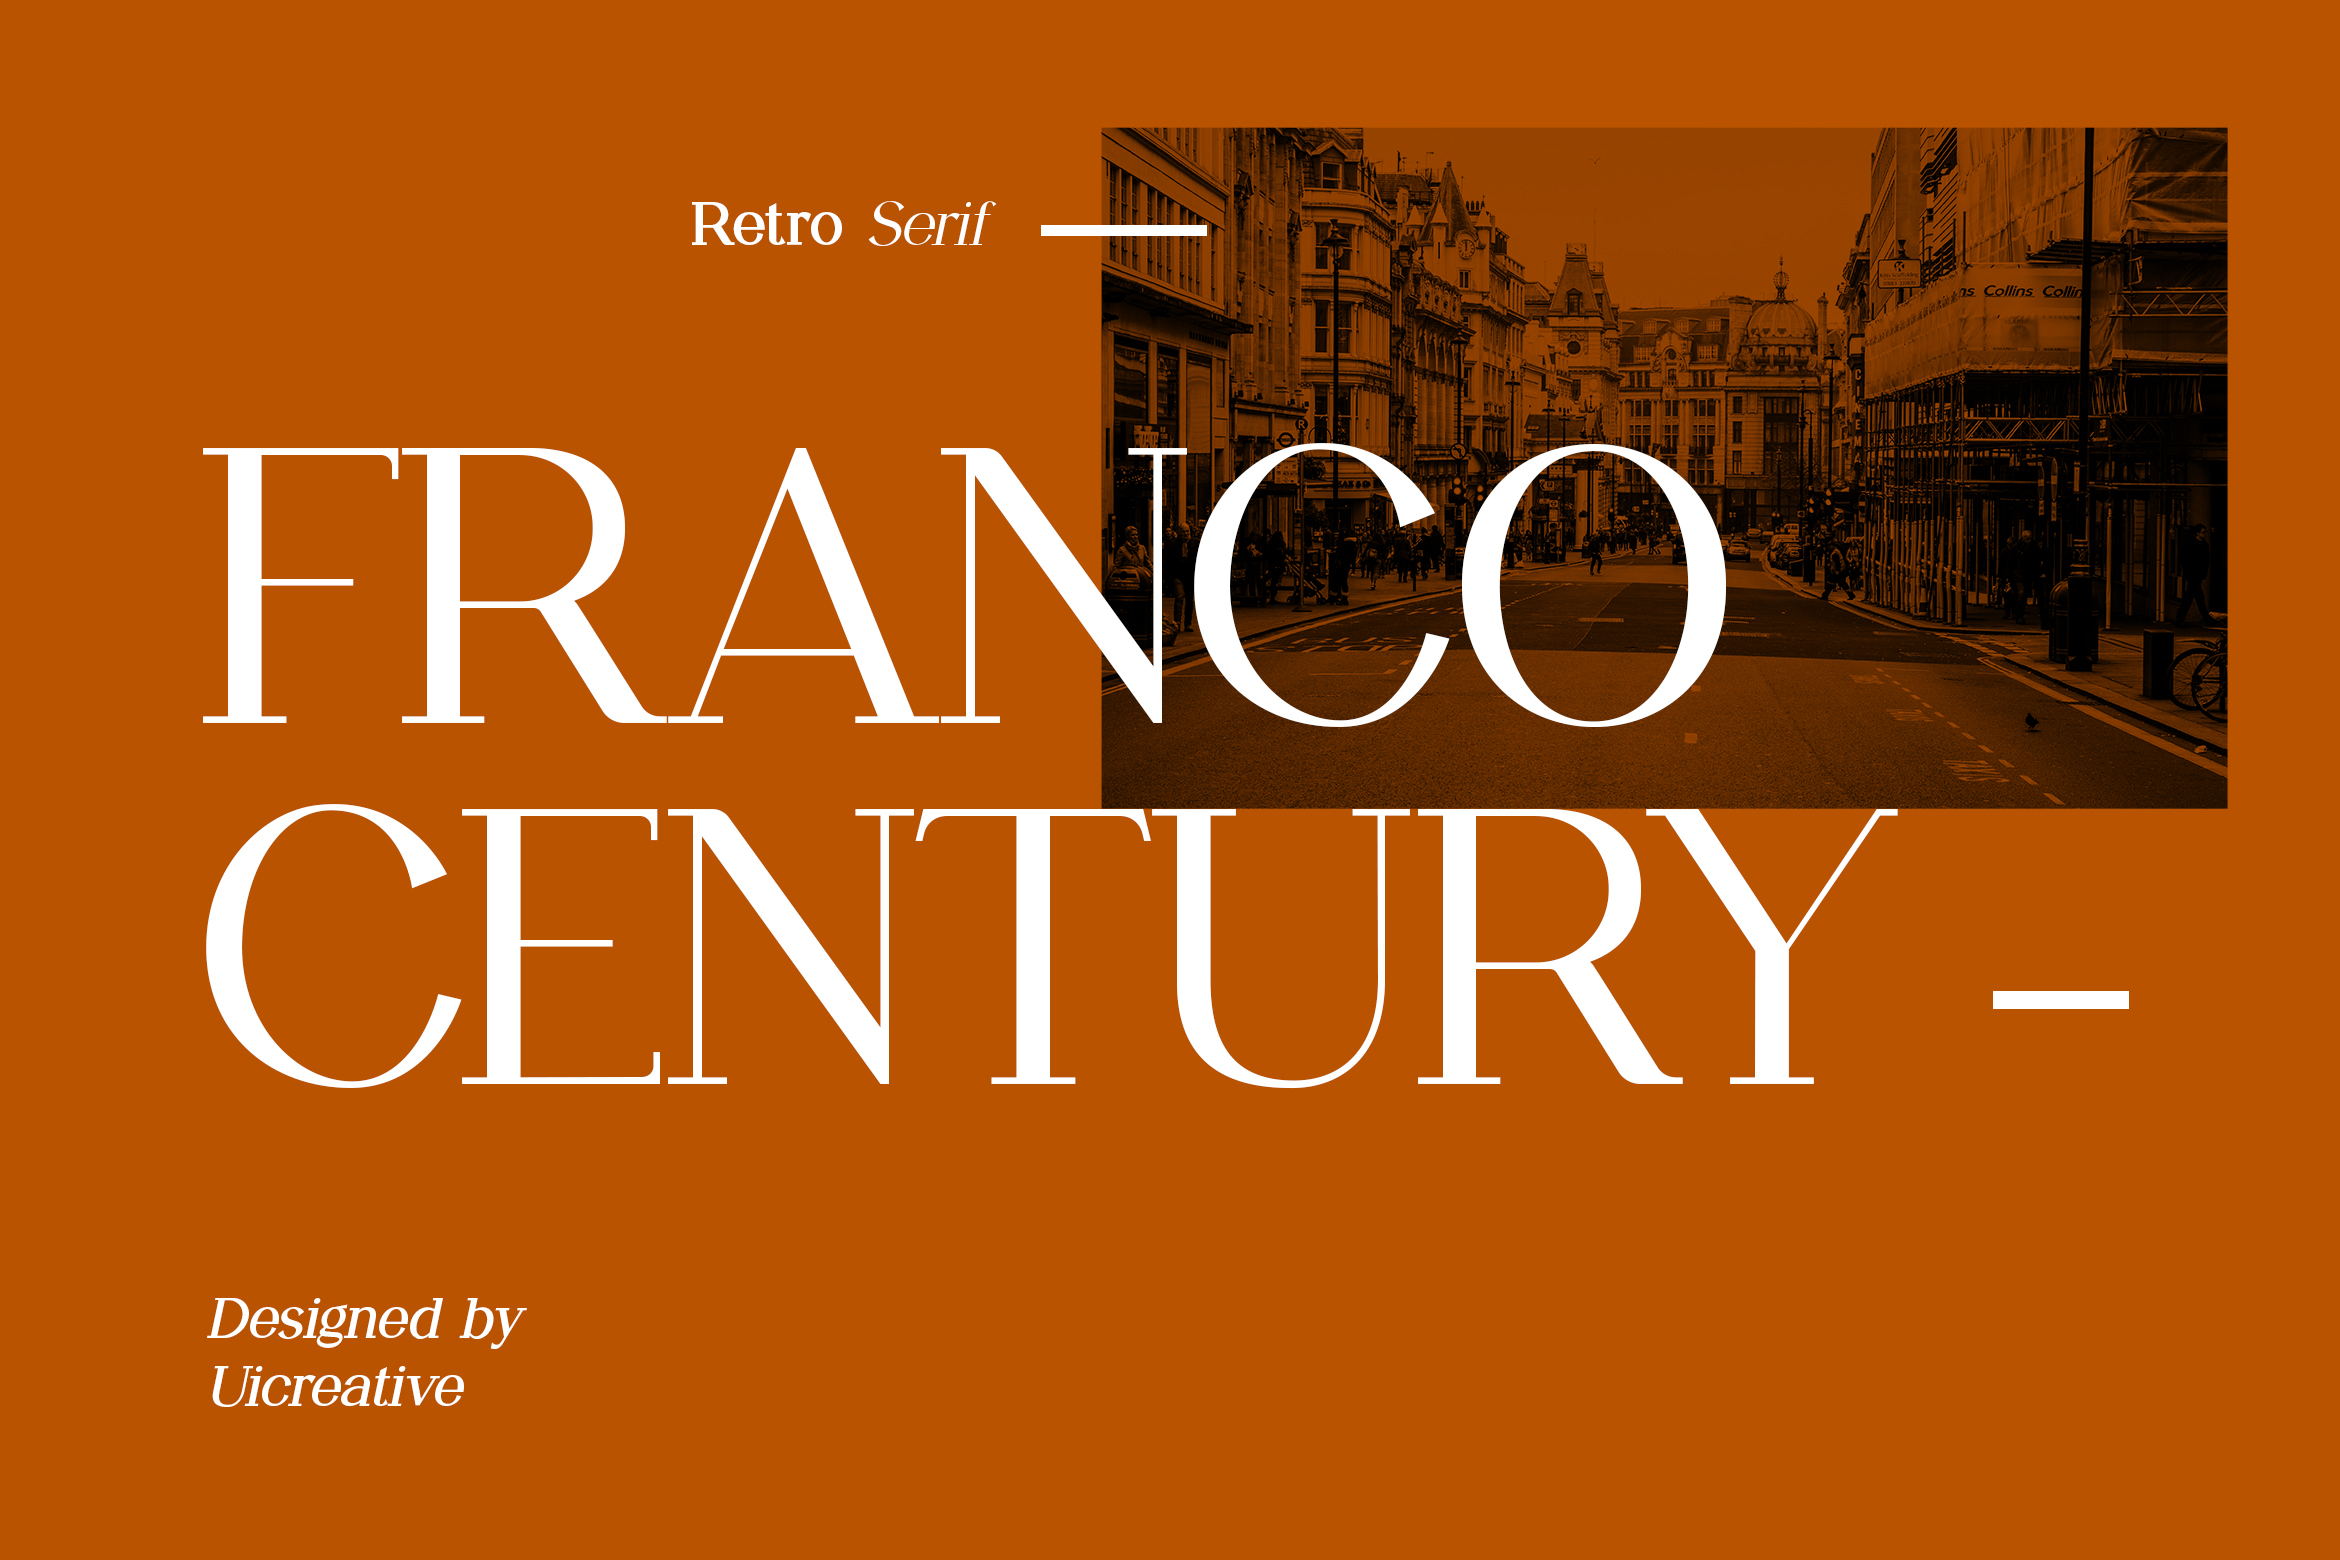 FRANCO CENTURY